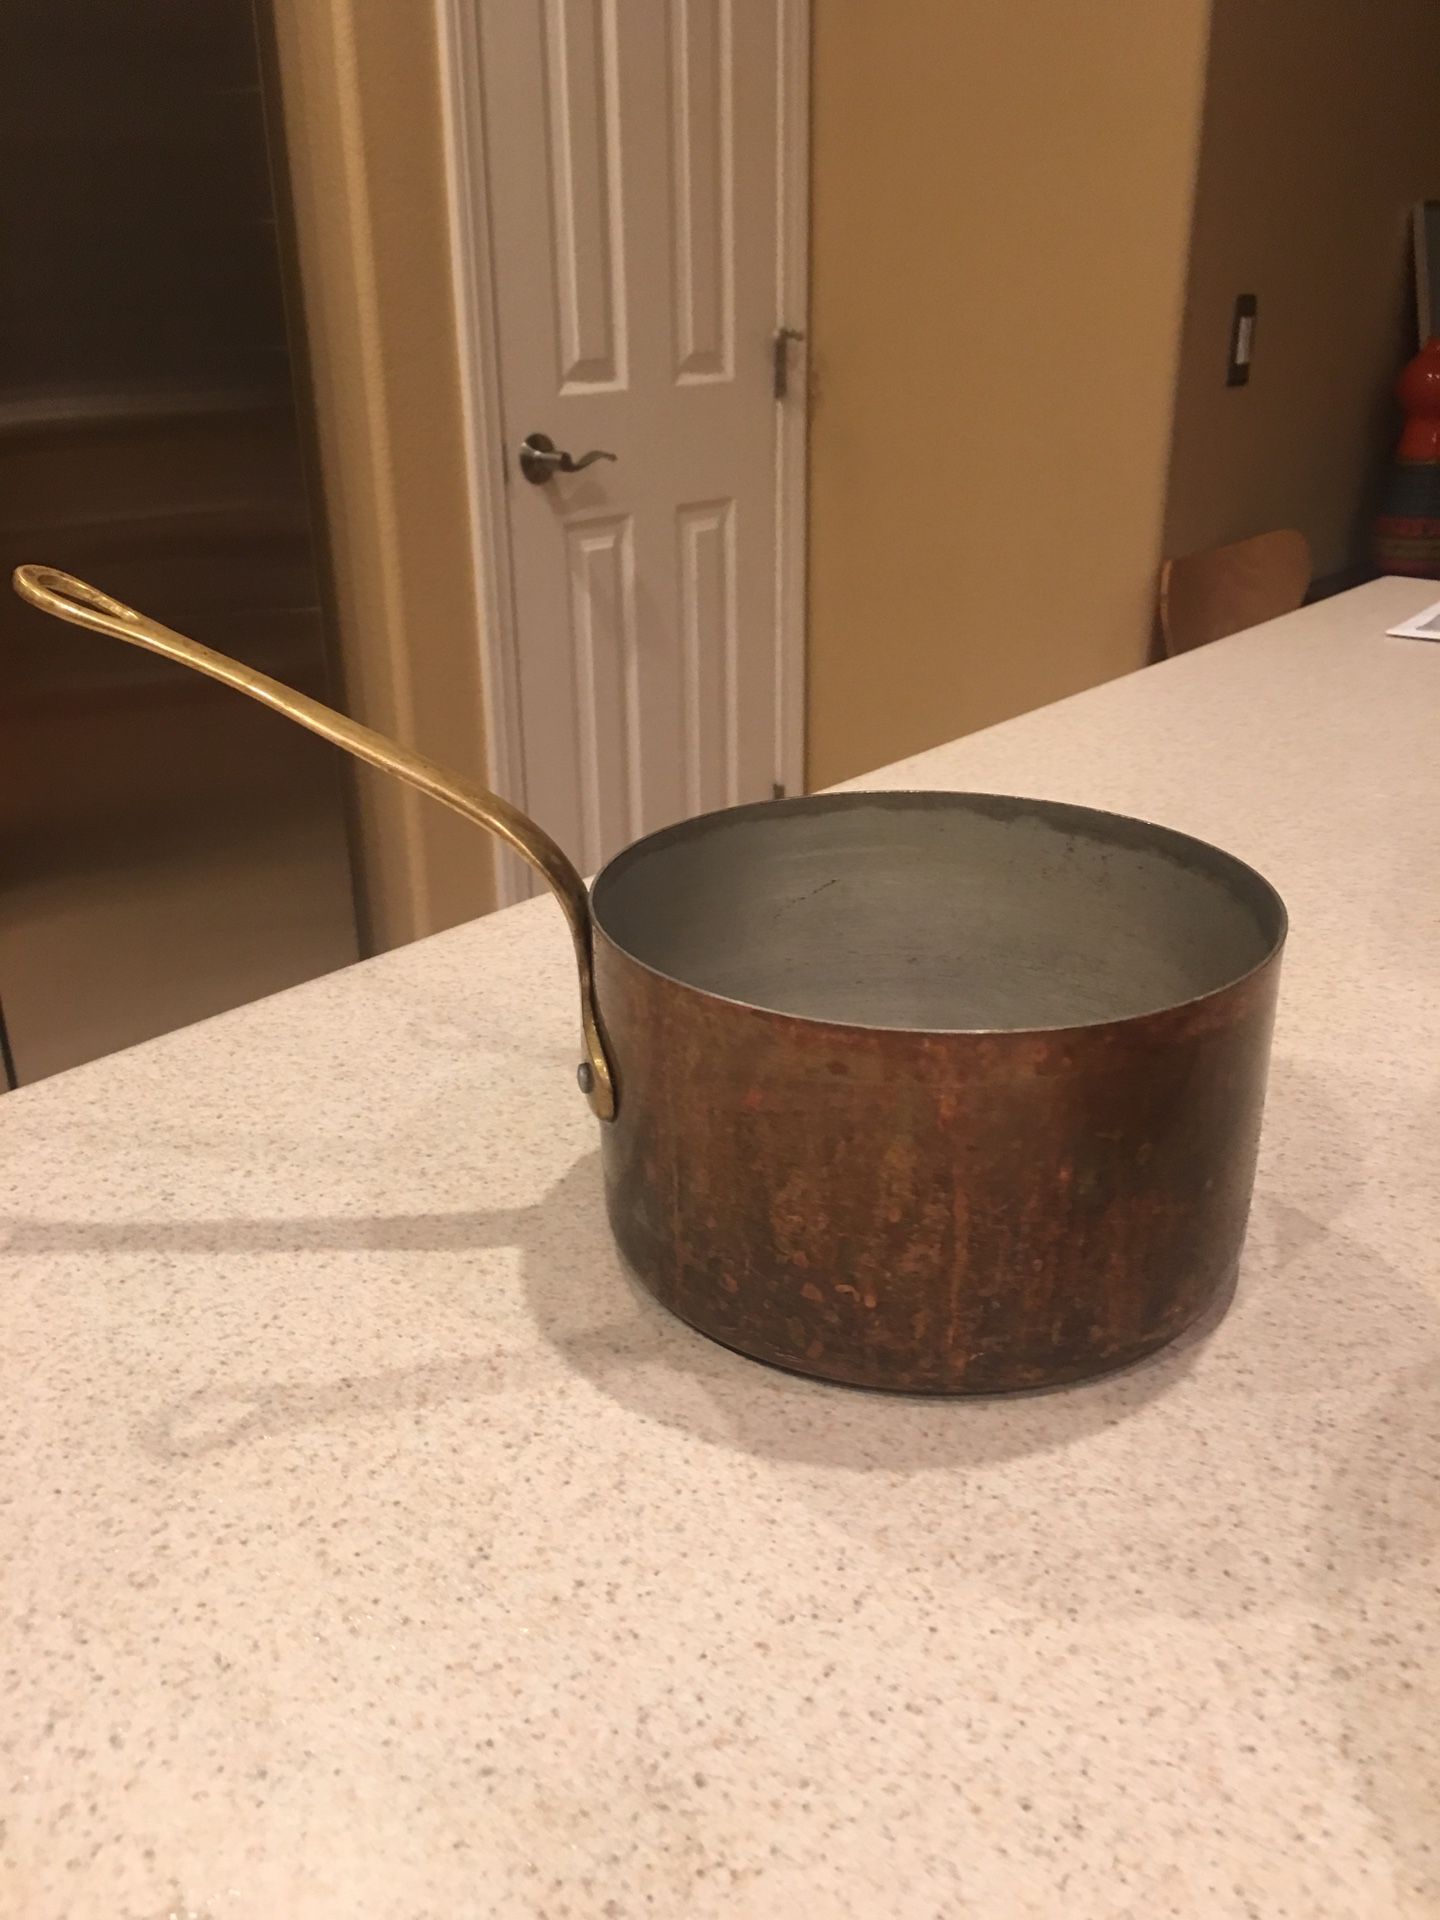 Copper pan